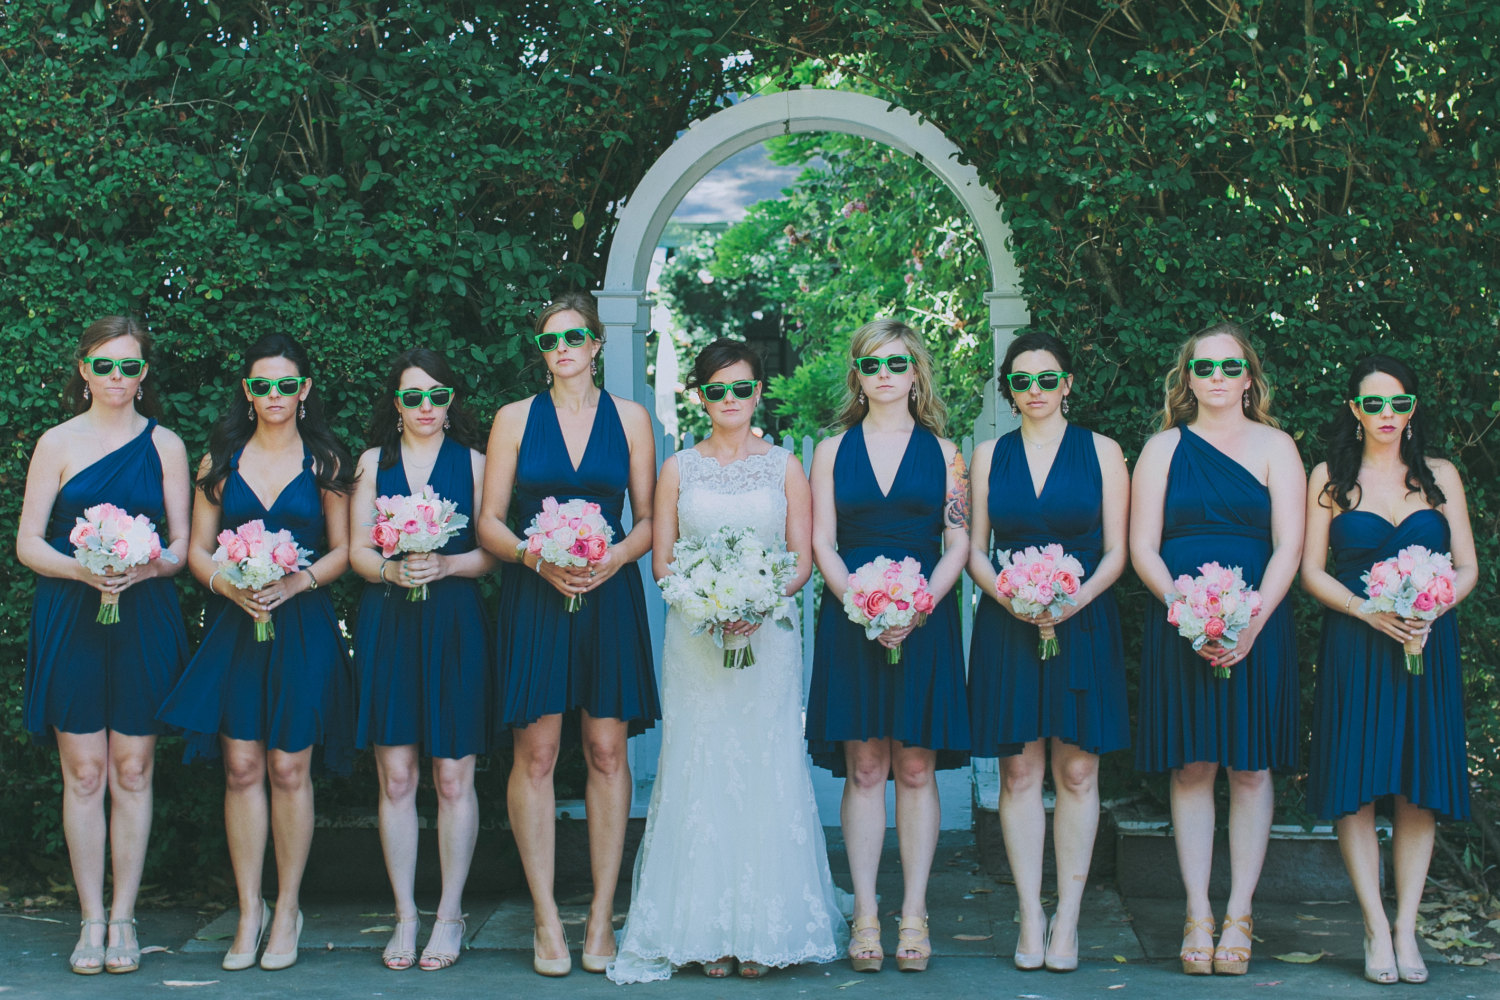 blue bridesmaid dresses, girls wearing sunglasses via https://emmalinebride.com/bridesmaids/bridesmaid-dress-worn-different-ways/